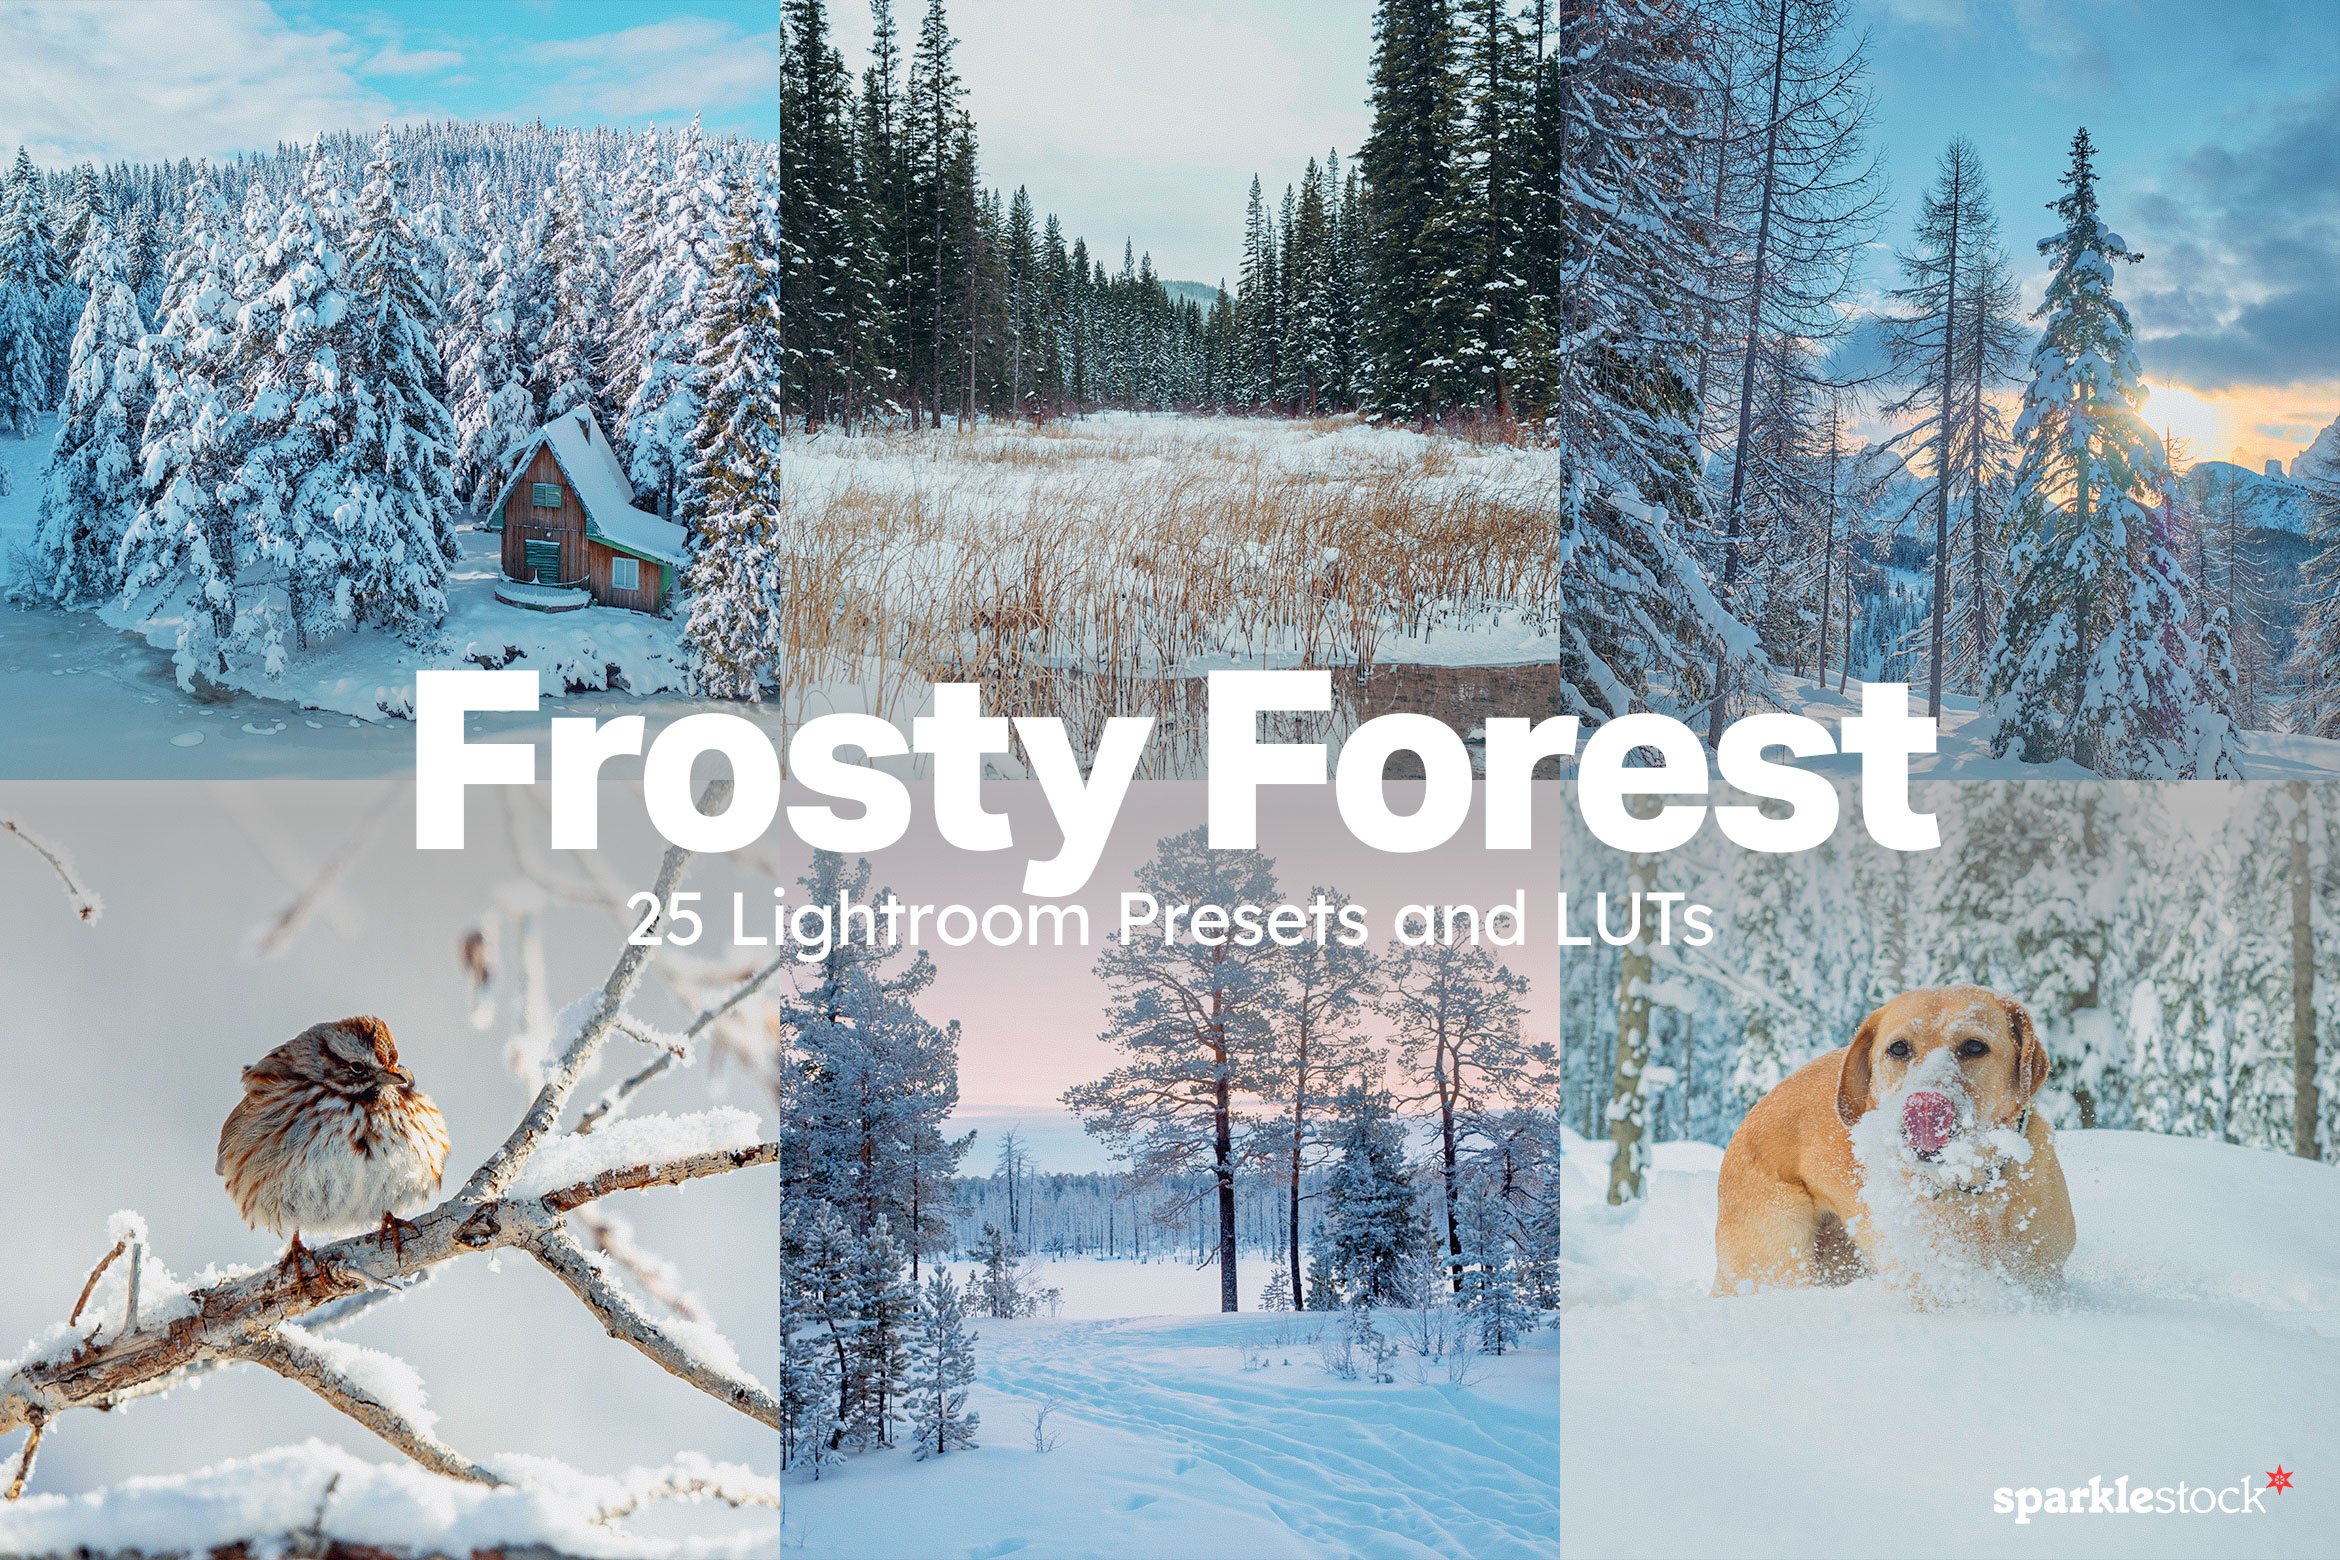 25 Frosty Forest Lightroom Presetscover image.